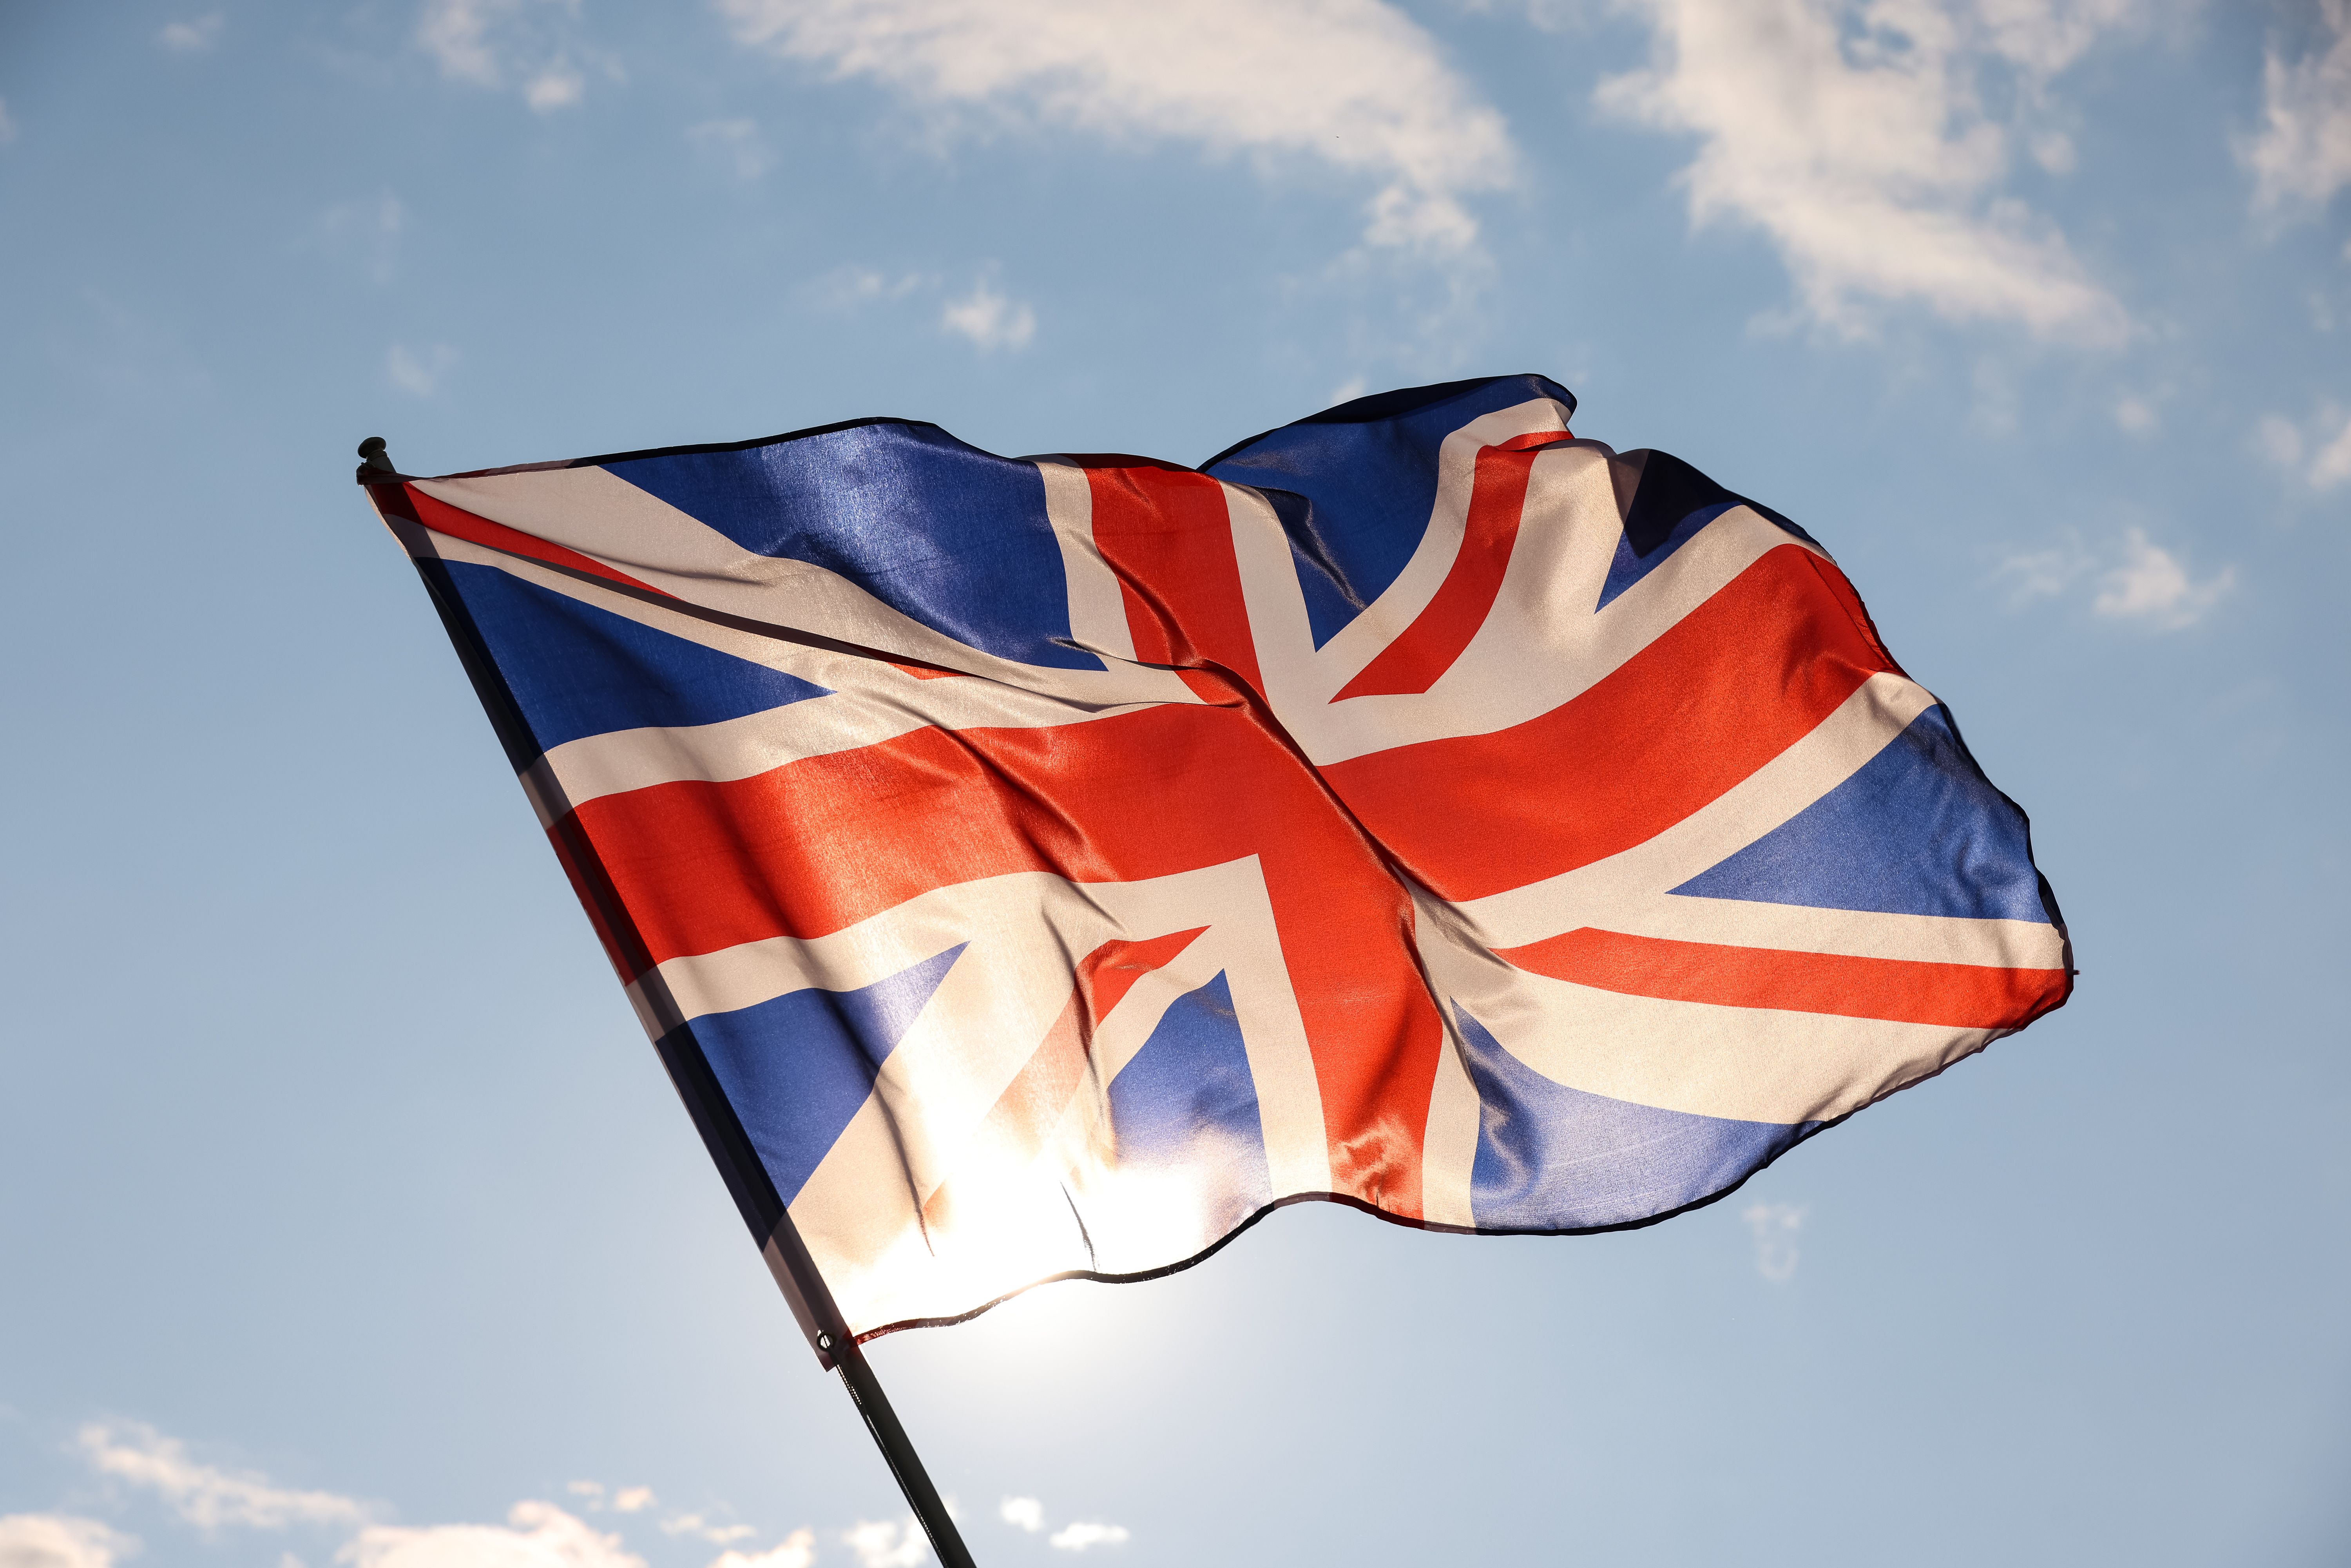 uk-great-britain-flag-waving-in-cloudy-blue-sky-2022-09-16-00-29-49-utc.jpg